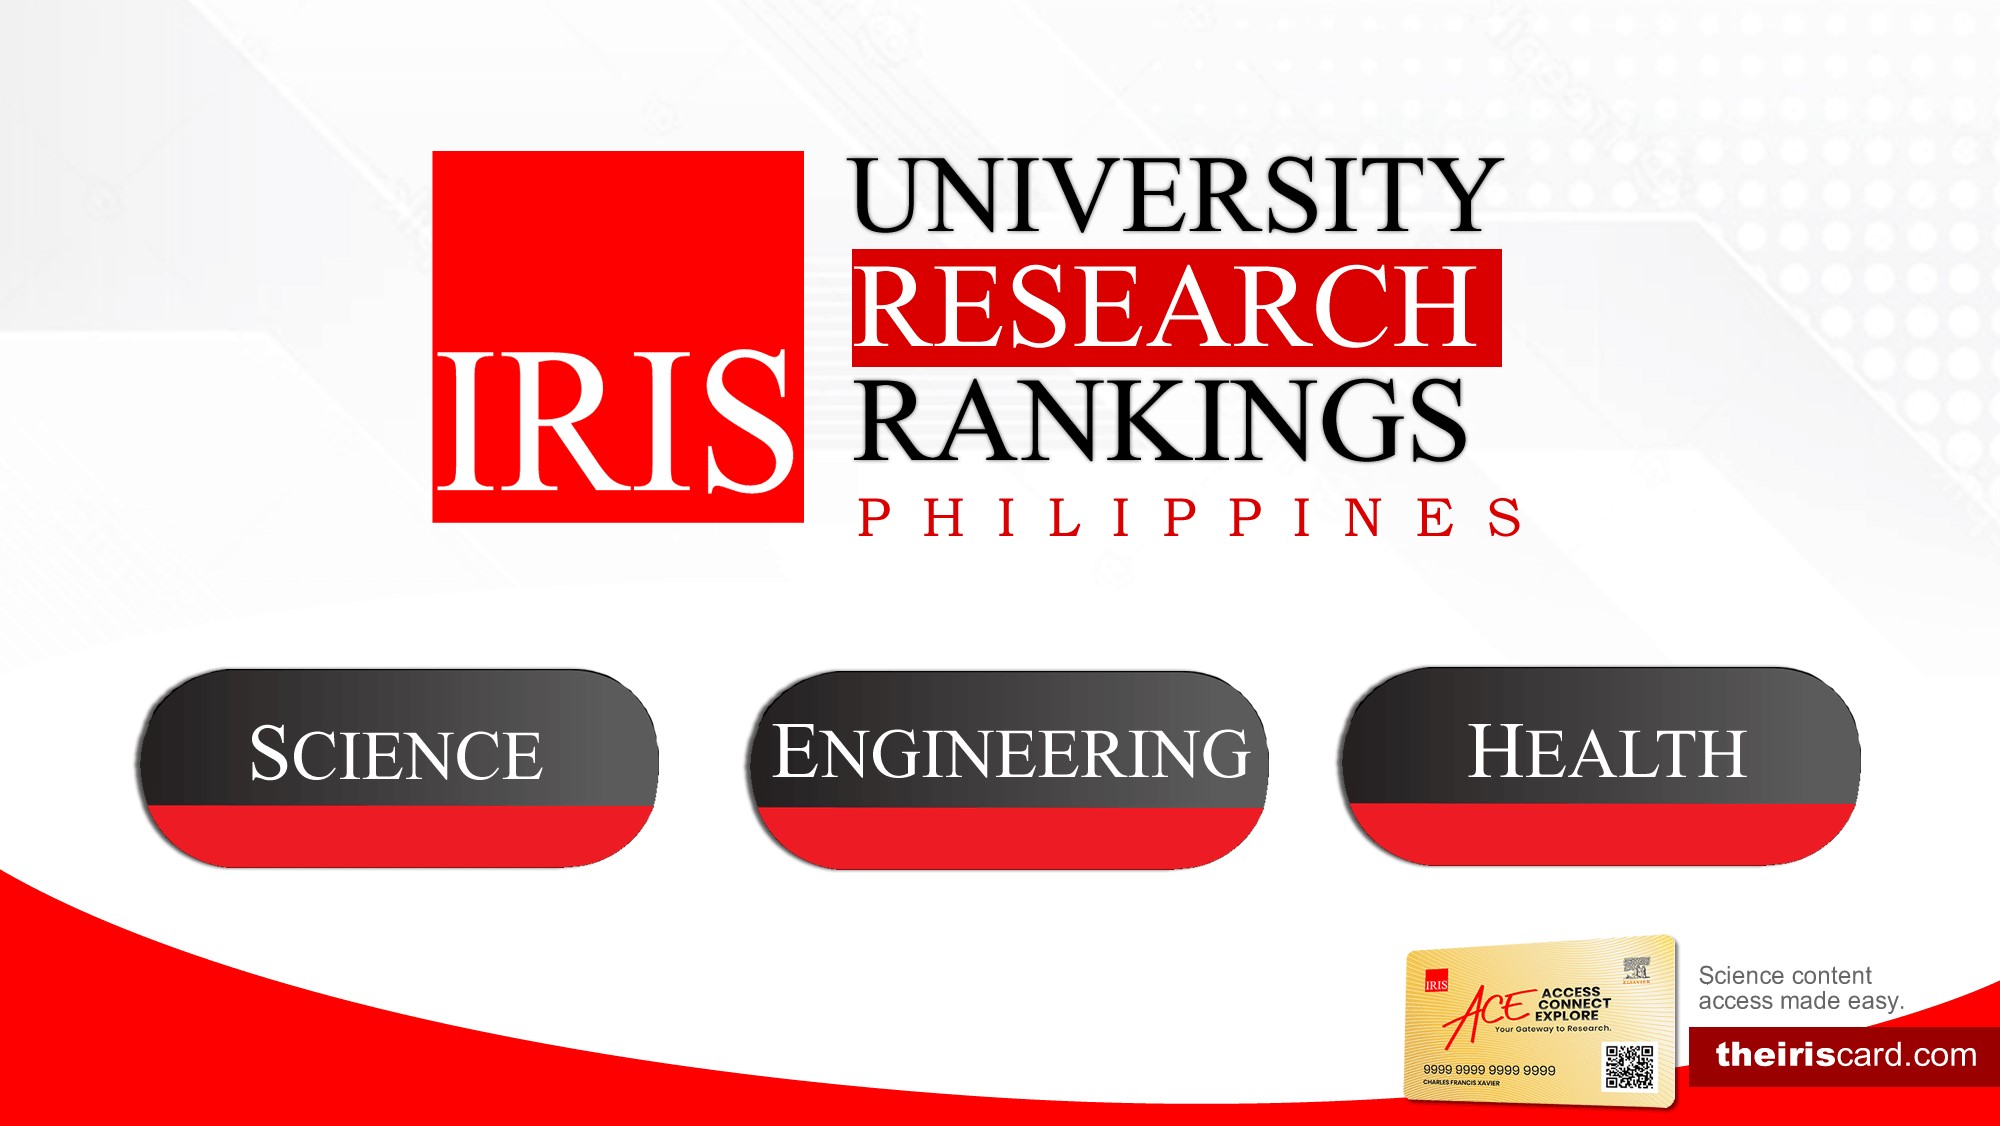 University Research Rankings